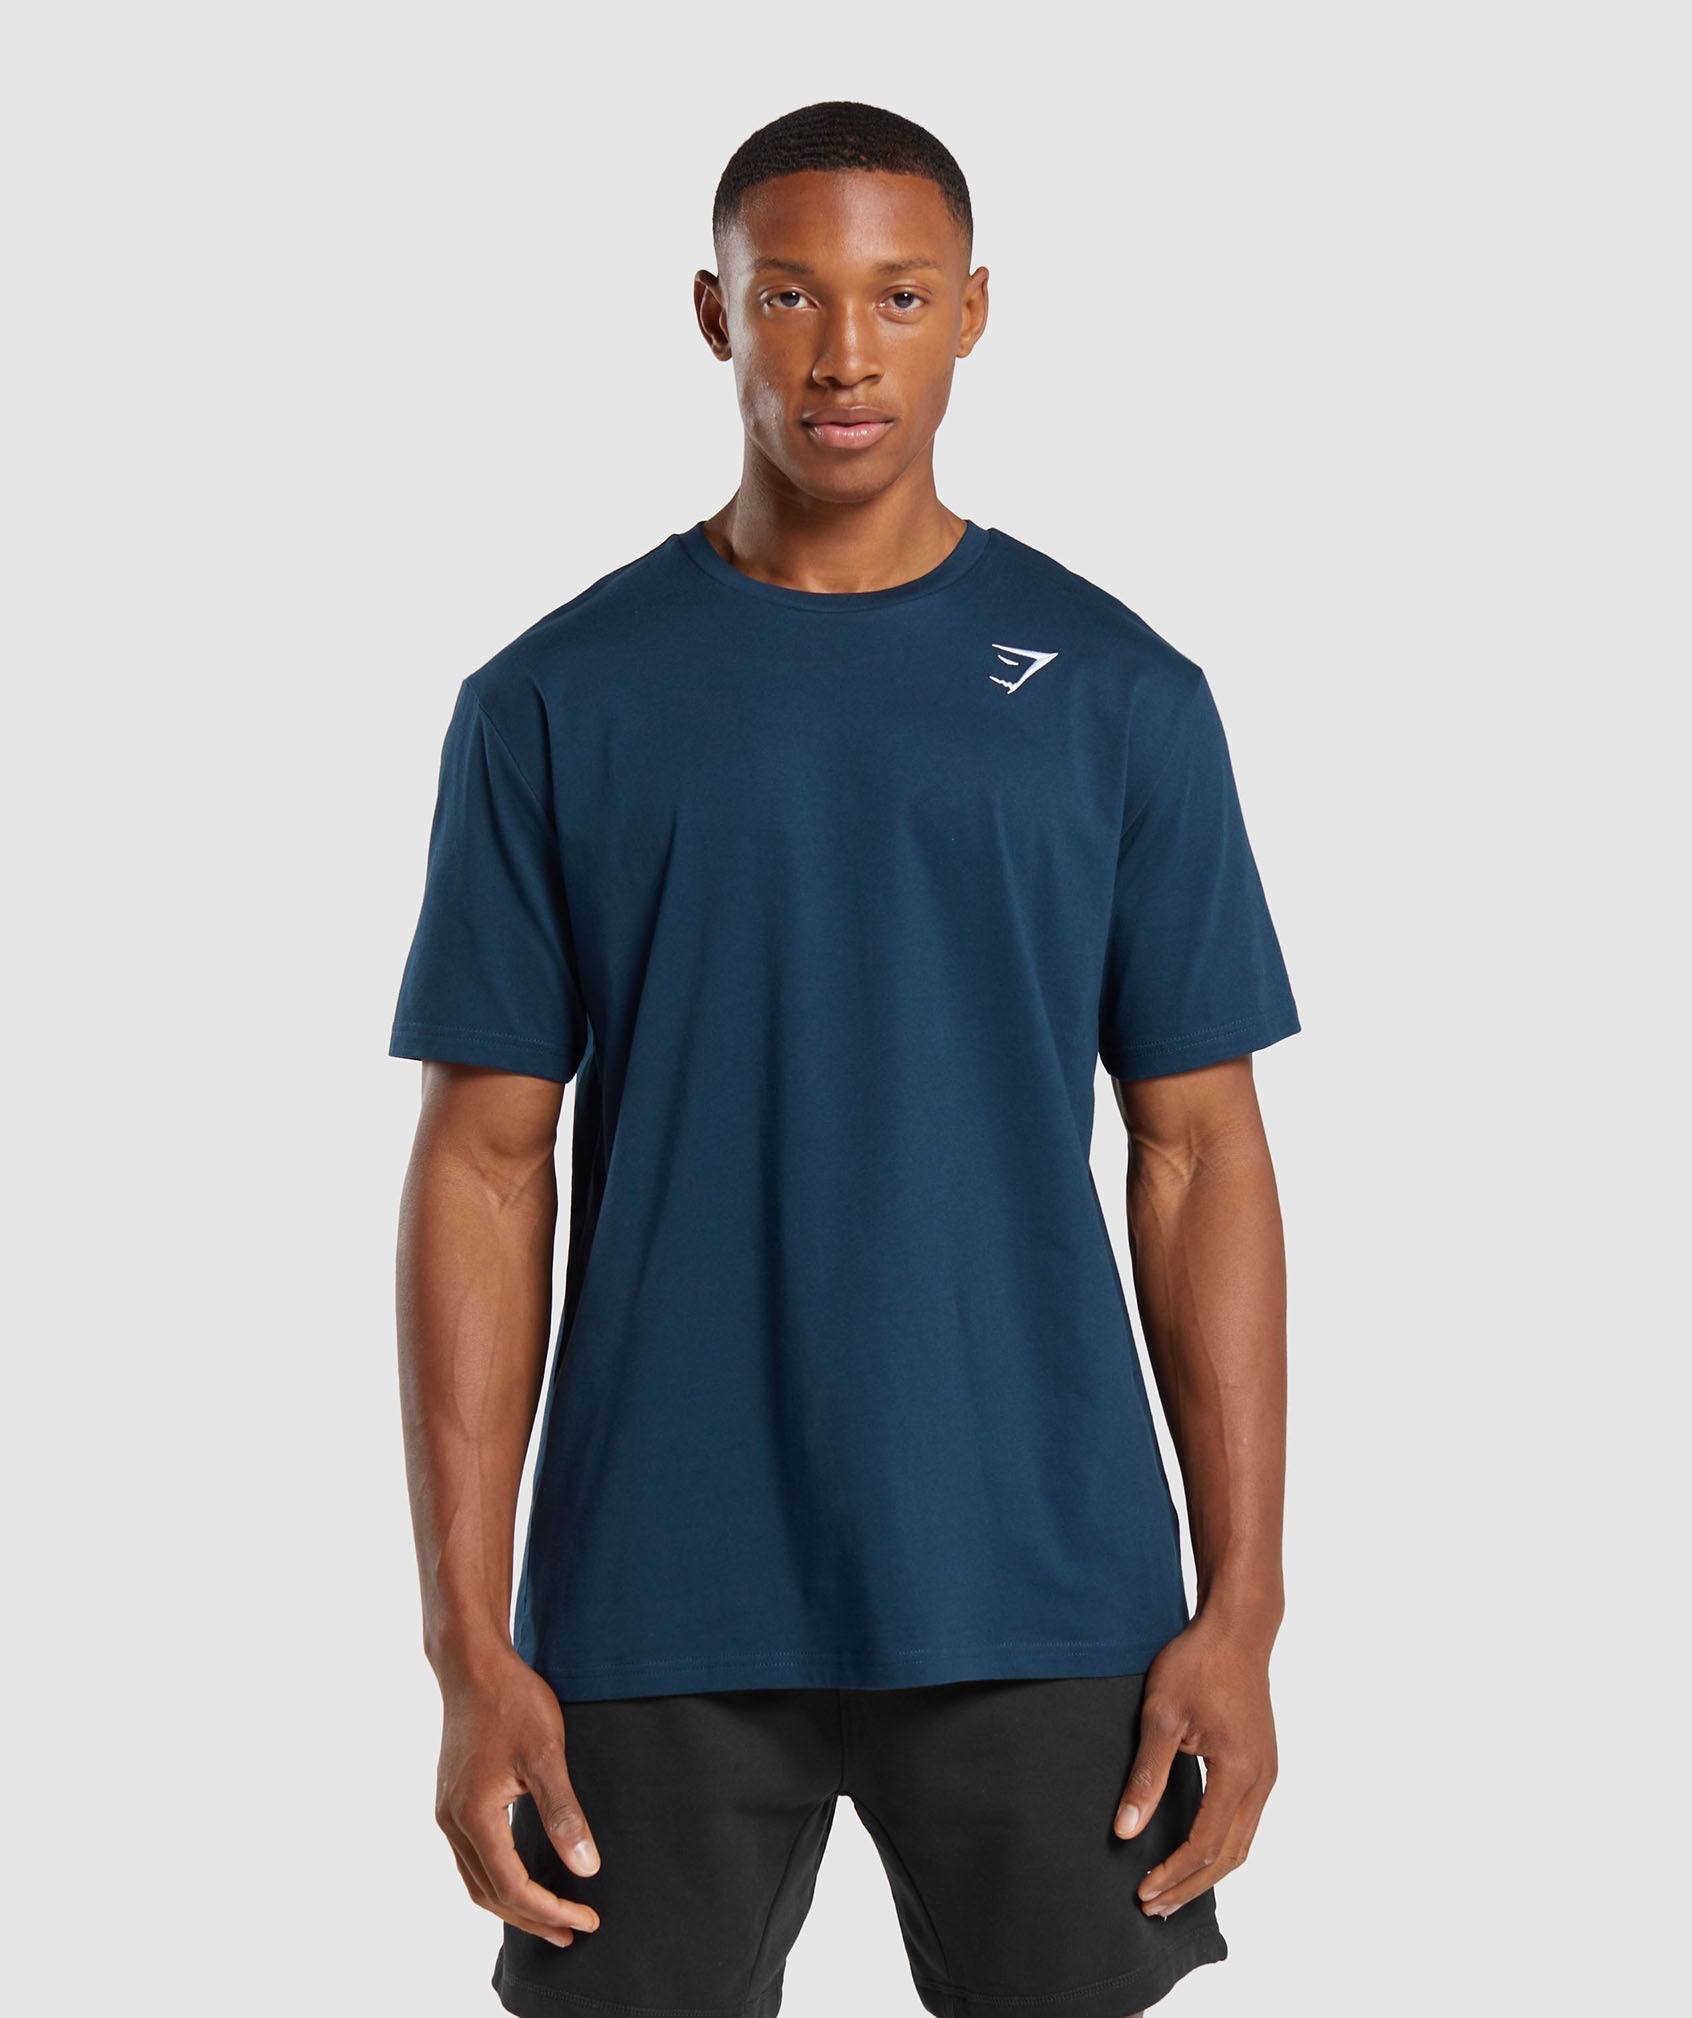 Gymshark Crest T-Shirt - Navy | Gymshark